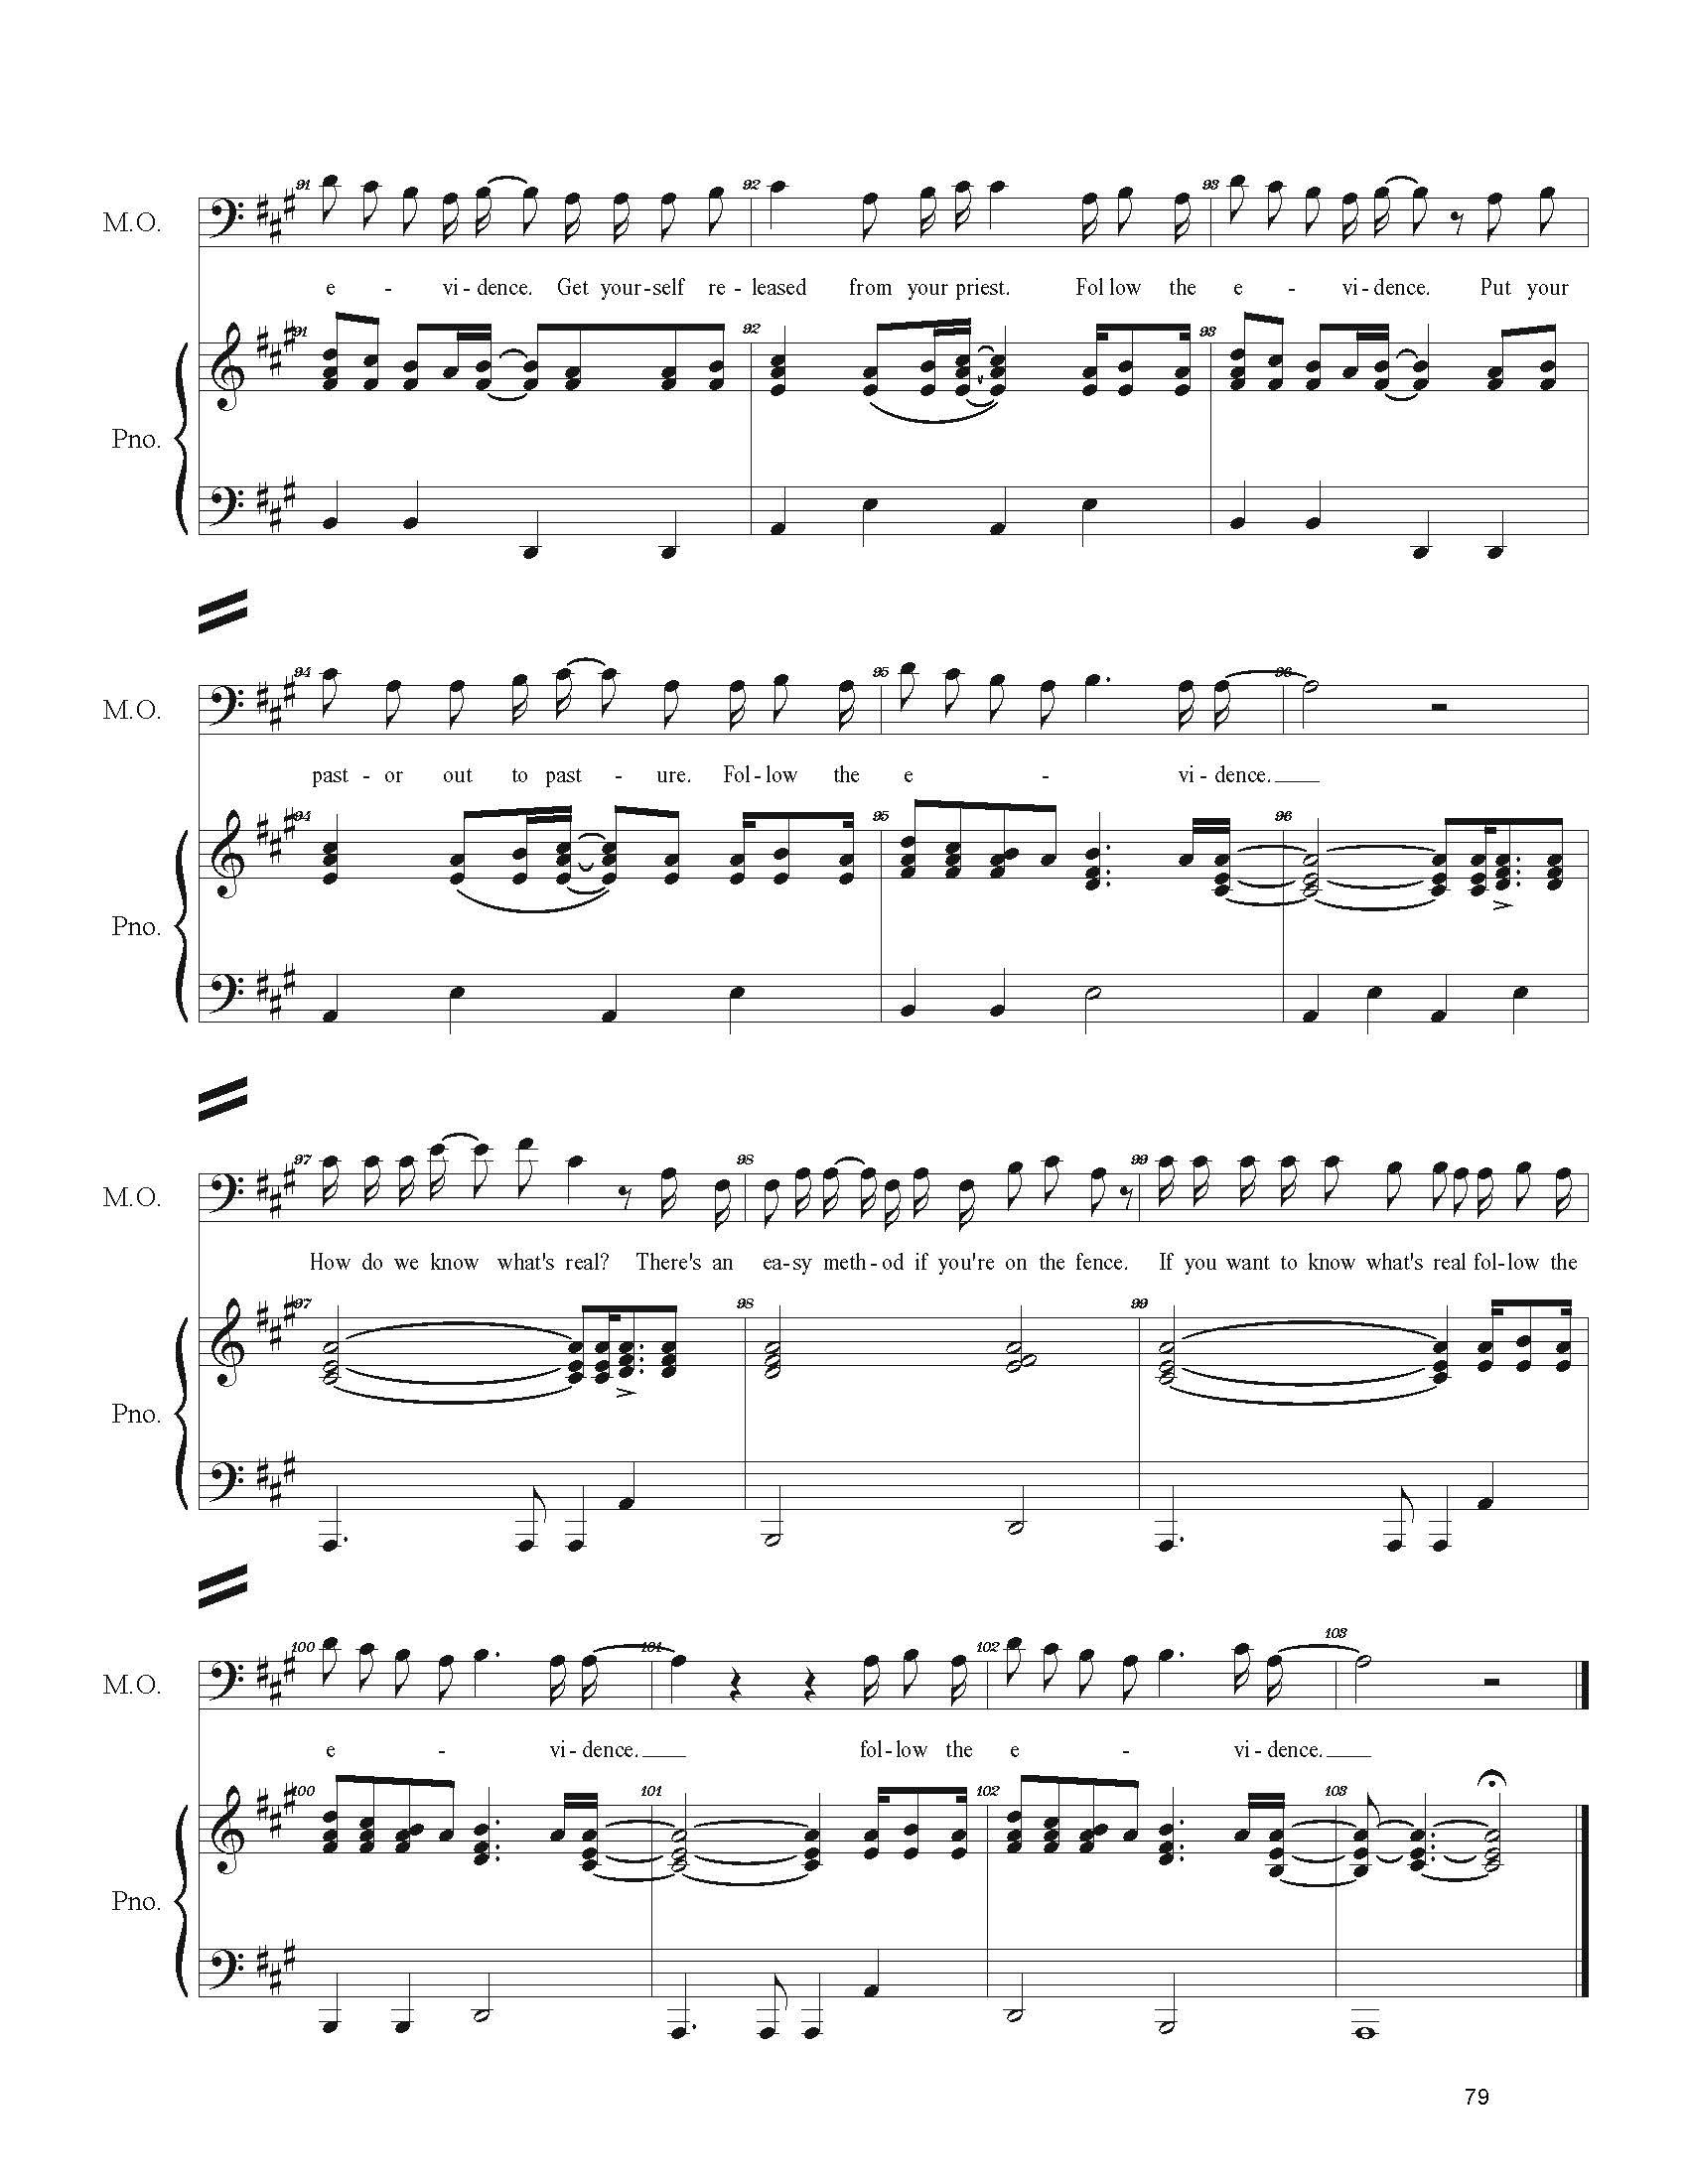 FULL PIANO VOCAL SCORE DRAFT 1 - Score_Page_079.jpg